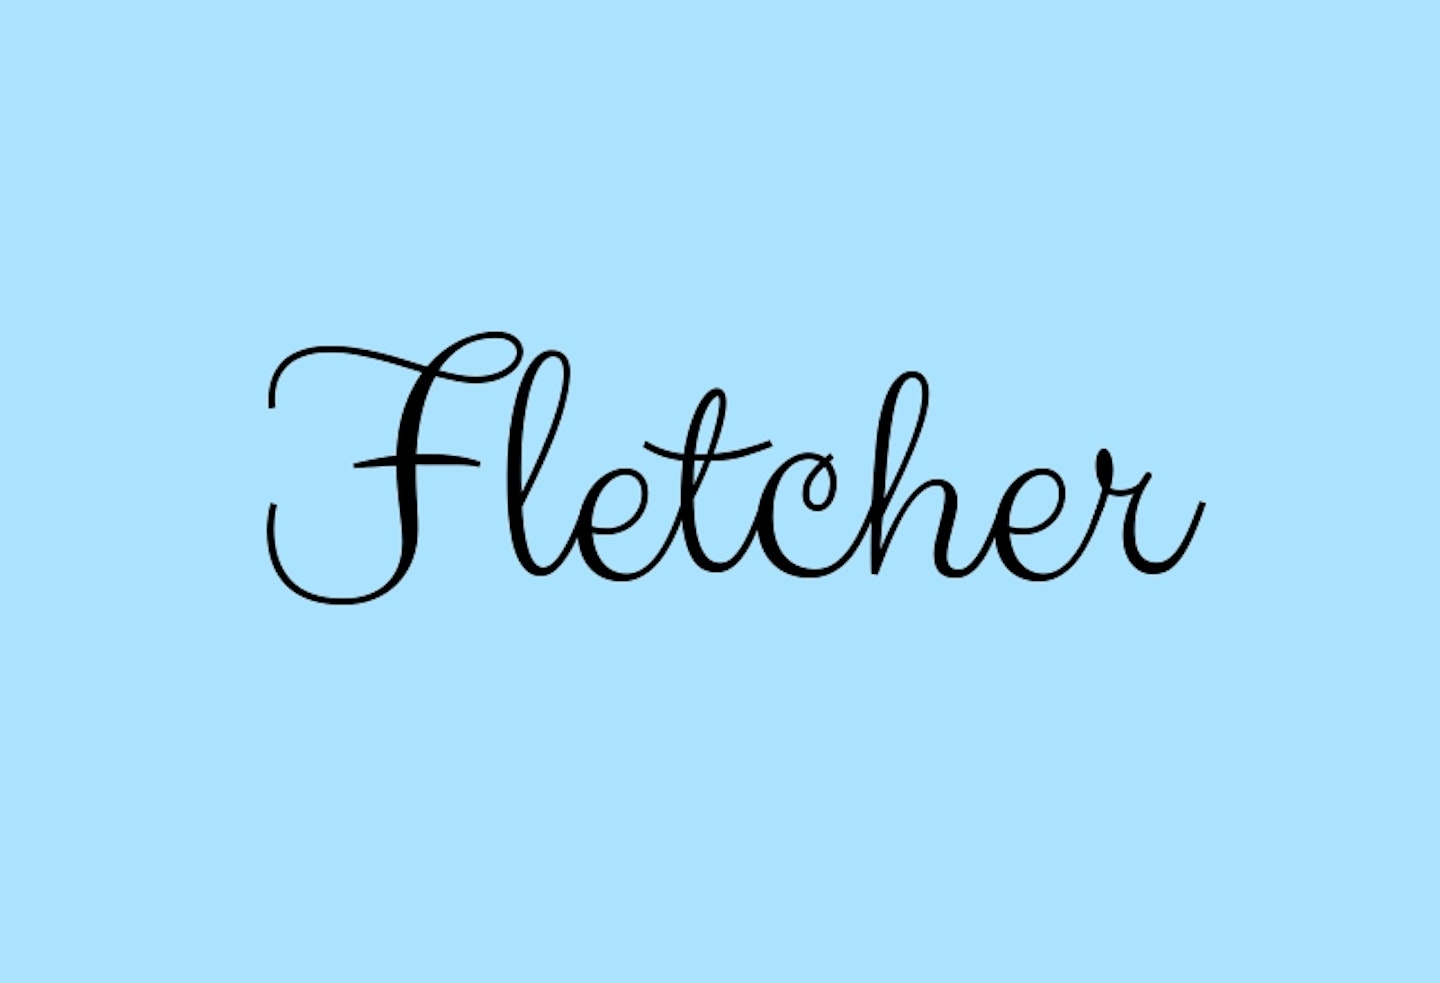 Fletcher